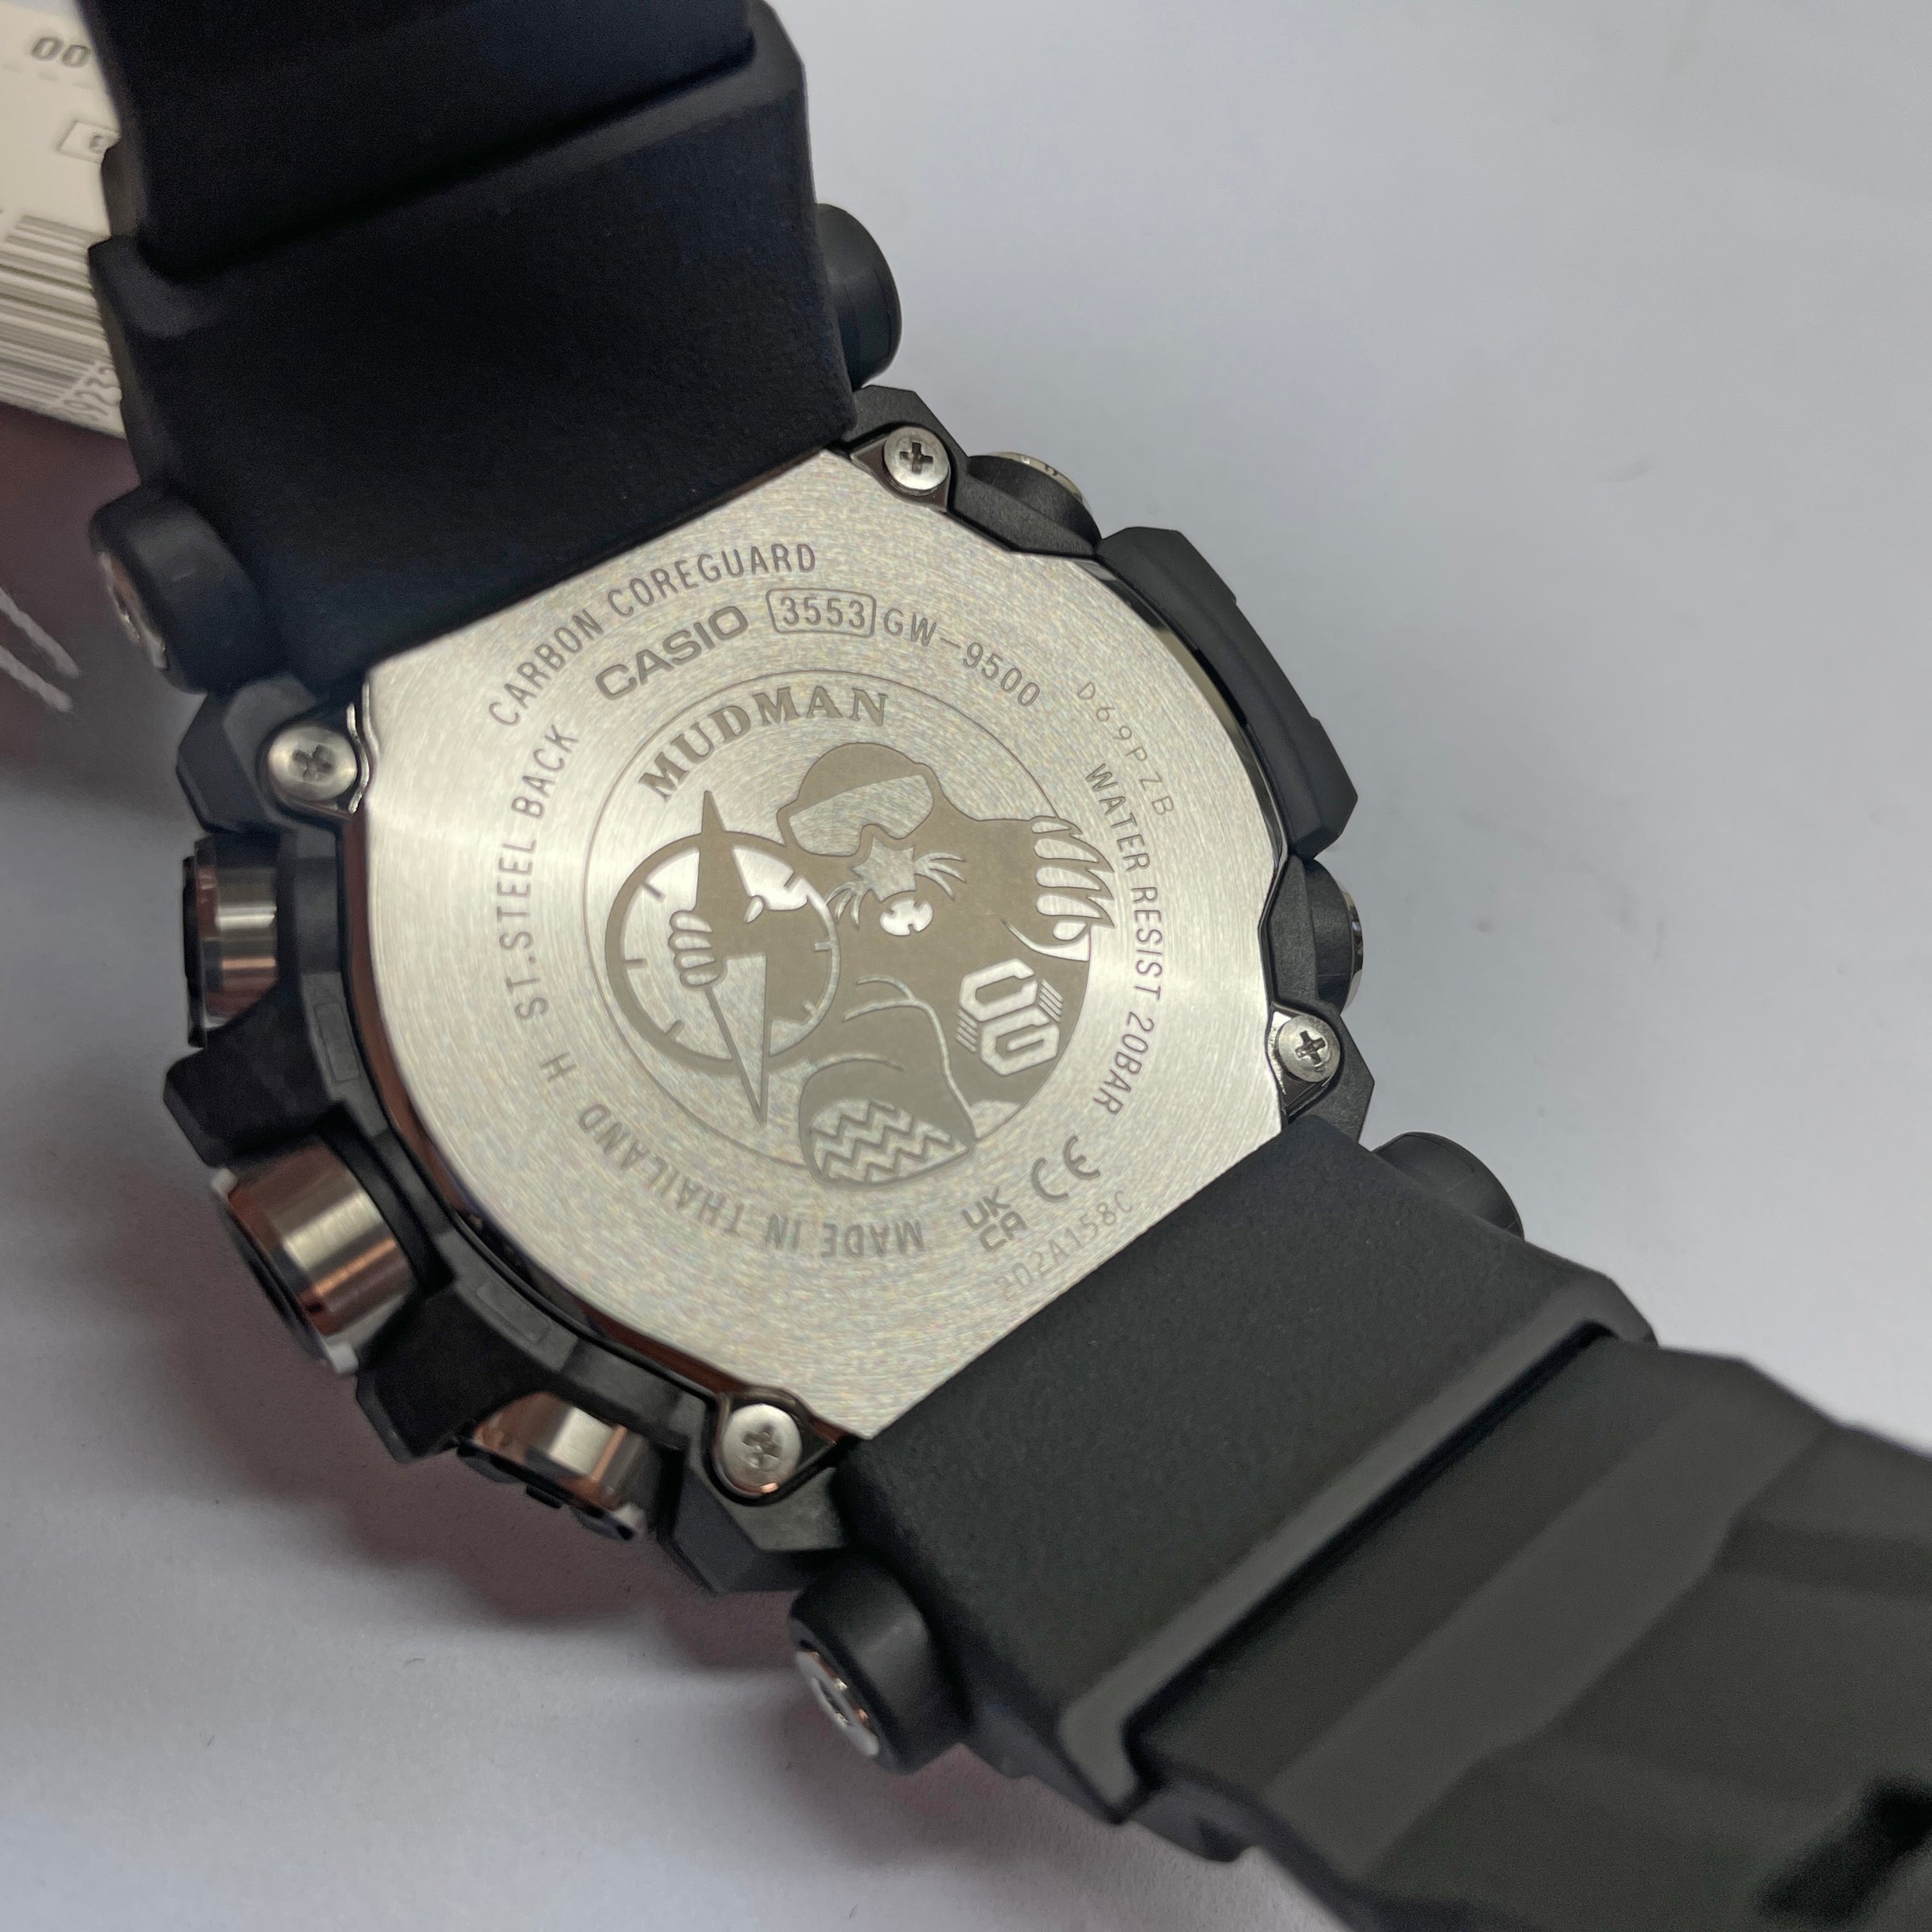 G-SHOCK MASTER OF G MUDMAN GW-9500-1JF - 時計